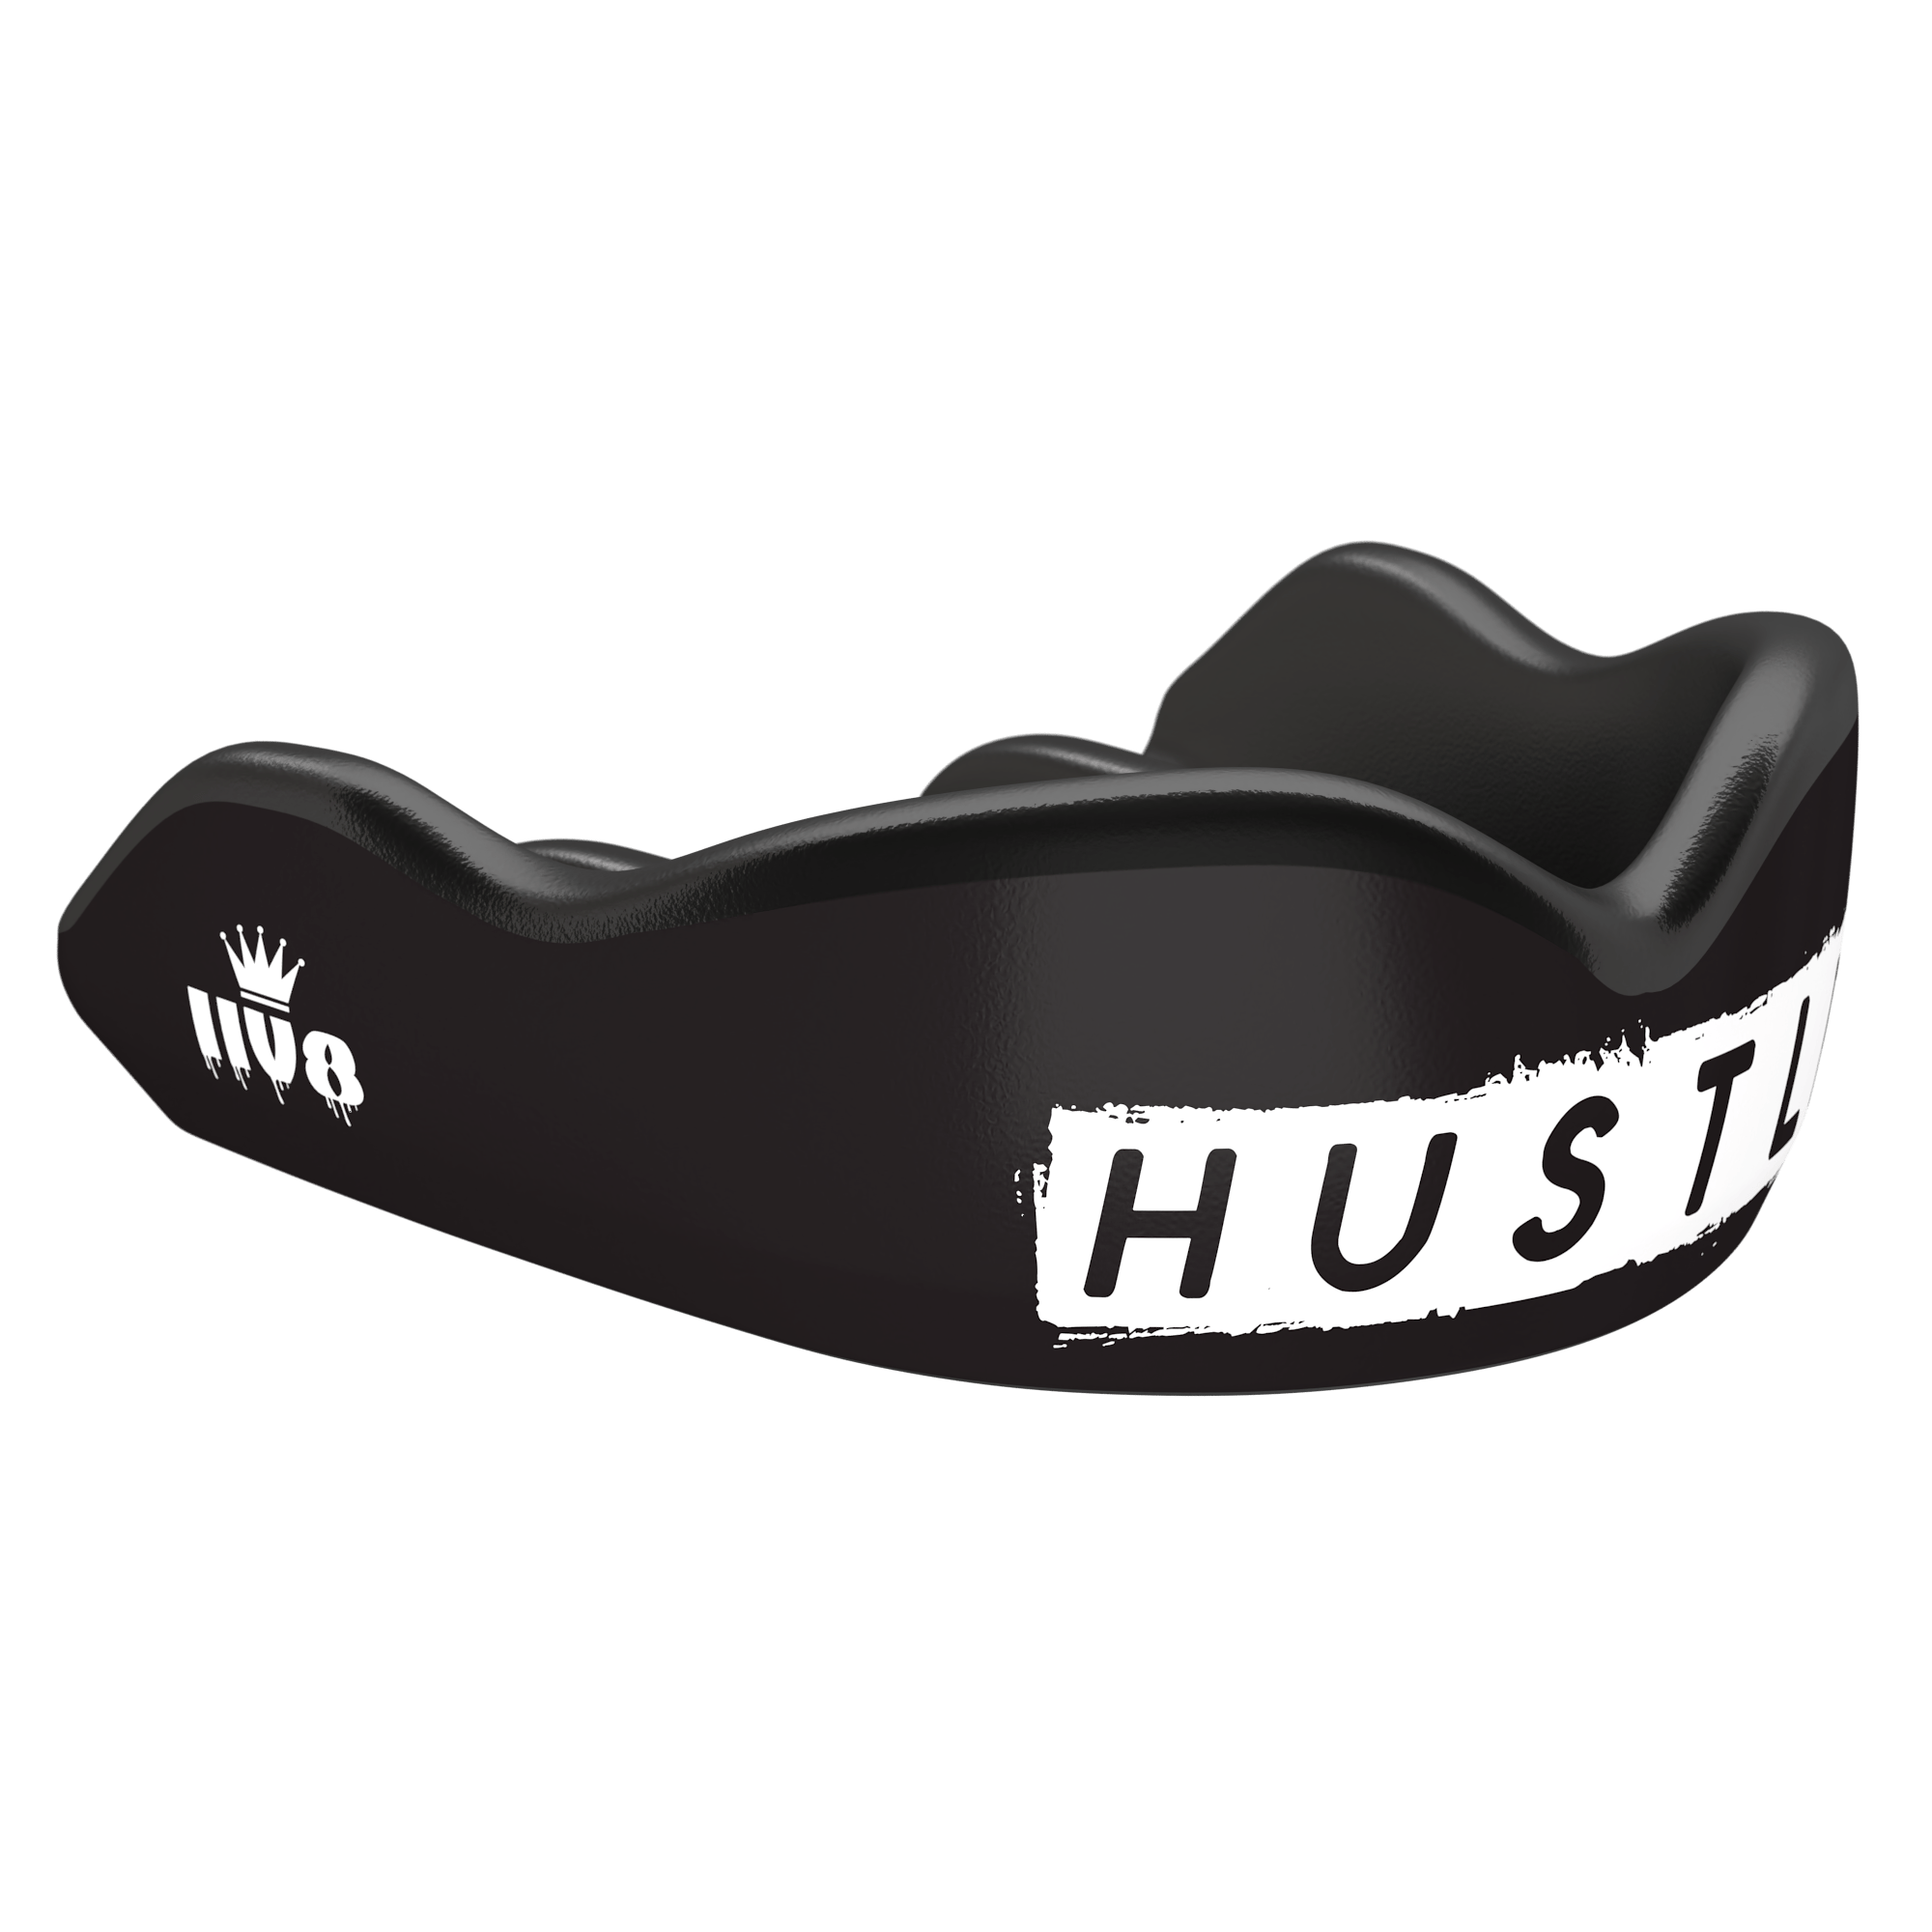 Hustle (HI) - Damage Control Mouthguards